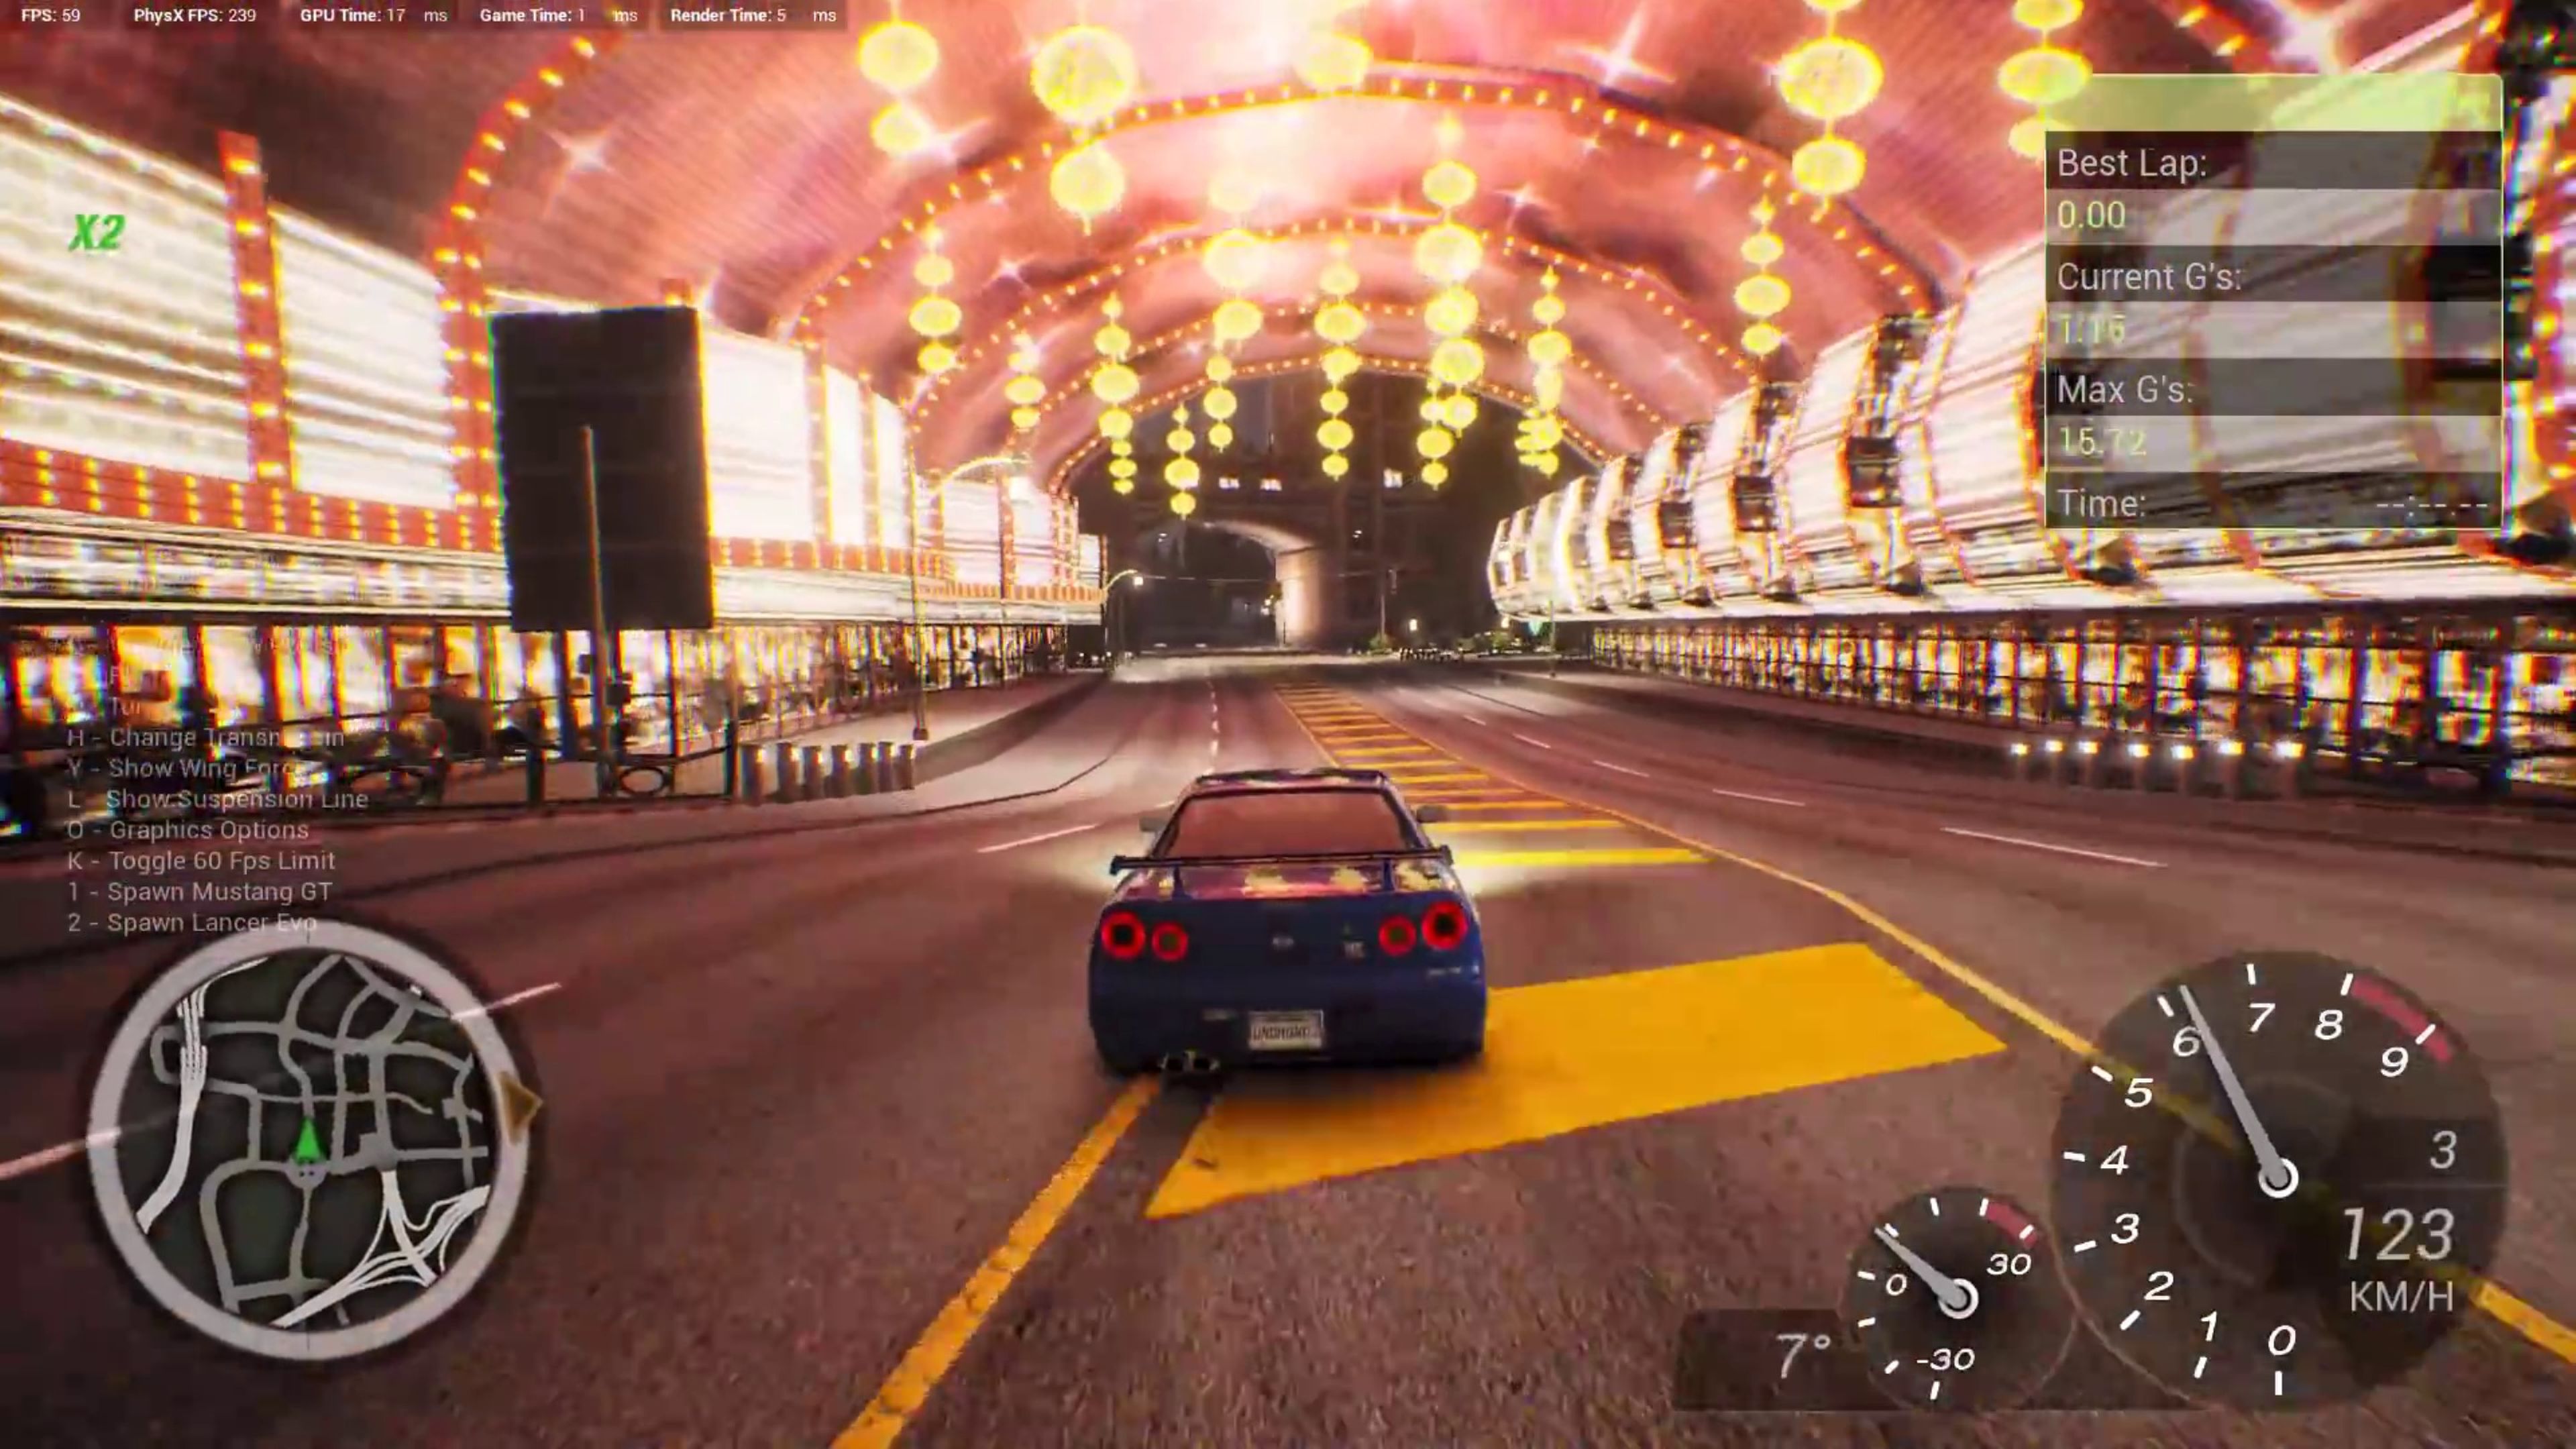 Fan remake de Need for Speed Underground 2 en Unreal Engine 4